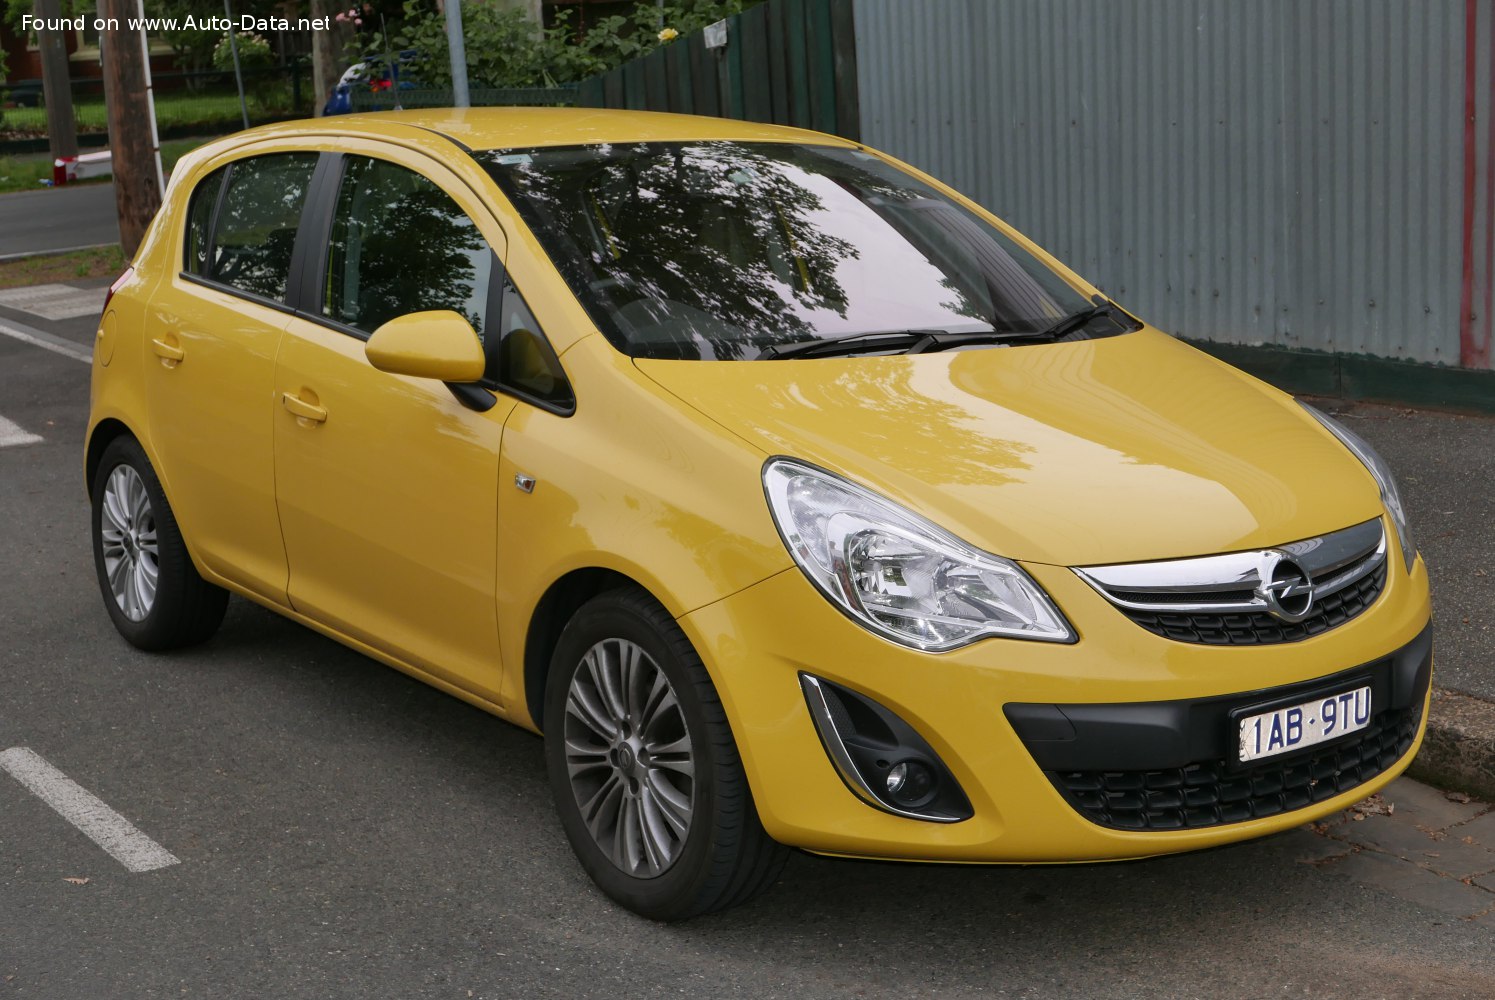 https://www.auto-data.net/images/f121/Opel-Corsa-D-Facelift-2011-5-door.jpg